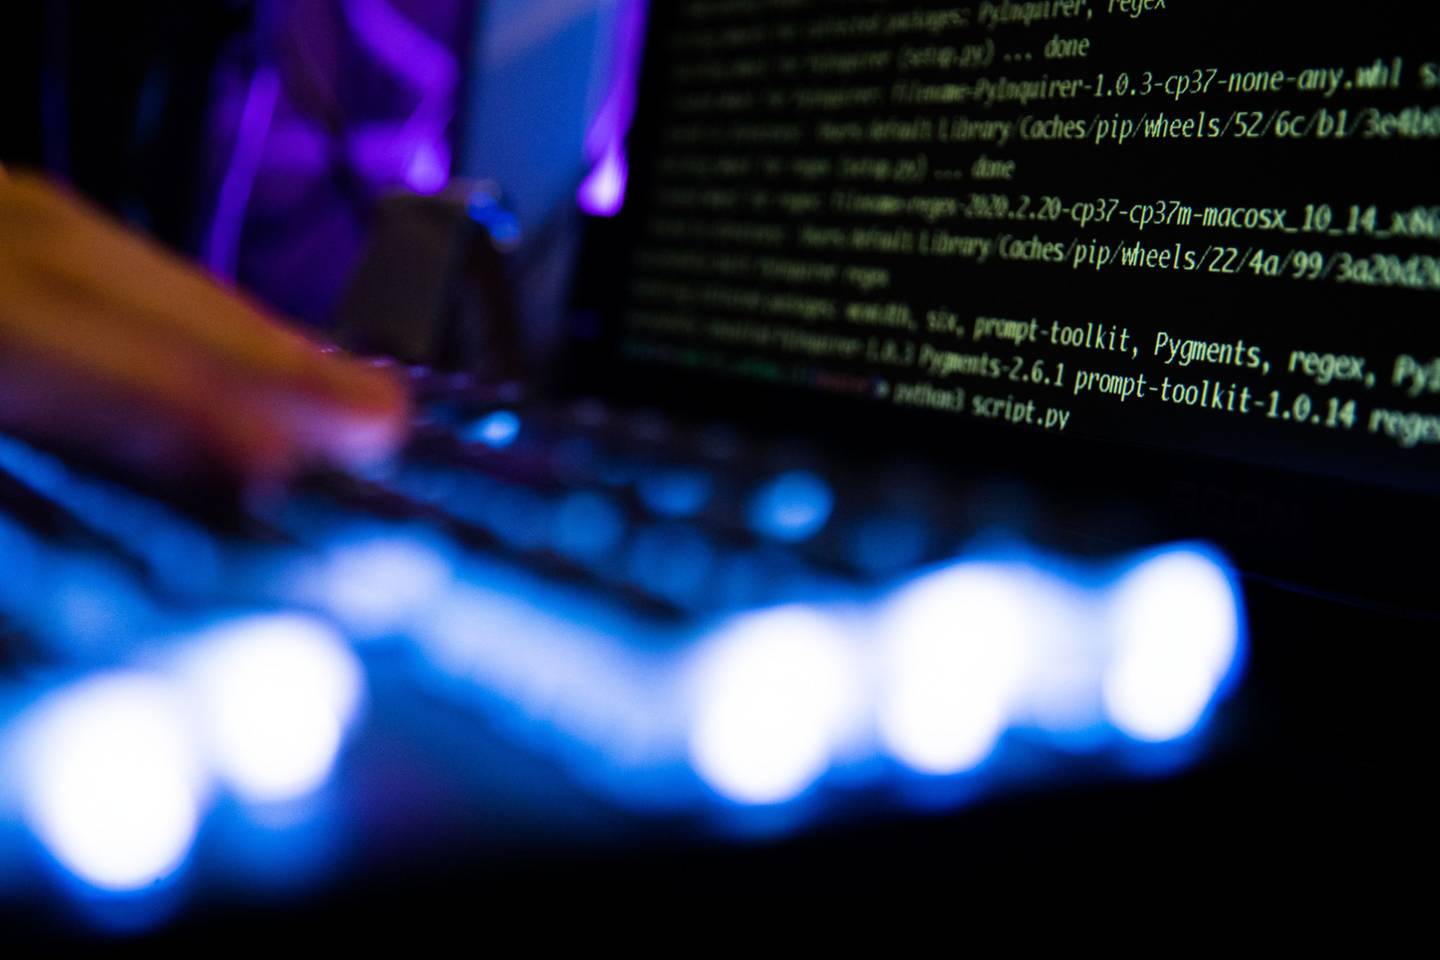 Código informático y texto mostrado en pantallas de ordenador. Fotógrafo: Chris Ratcliffe/Bloomberg